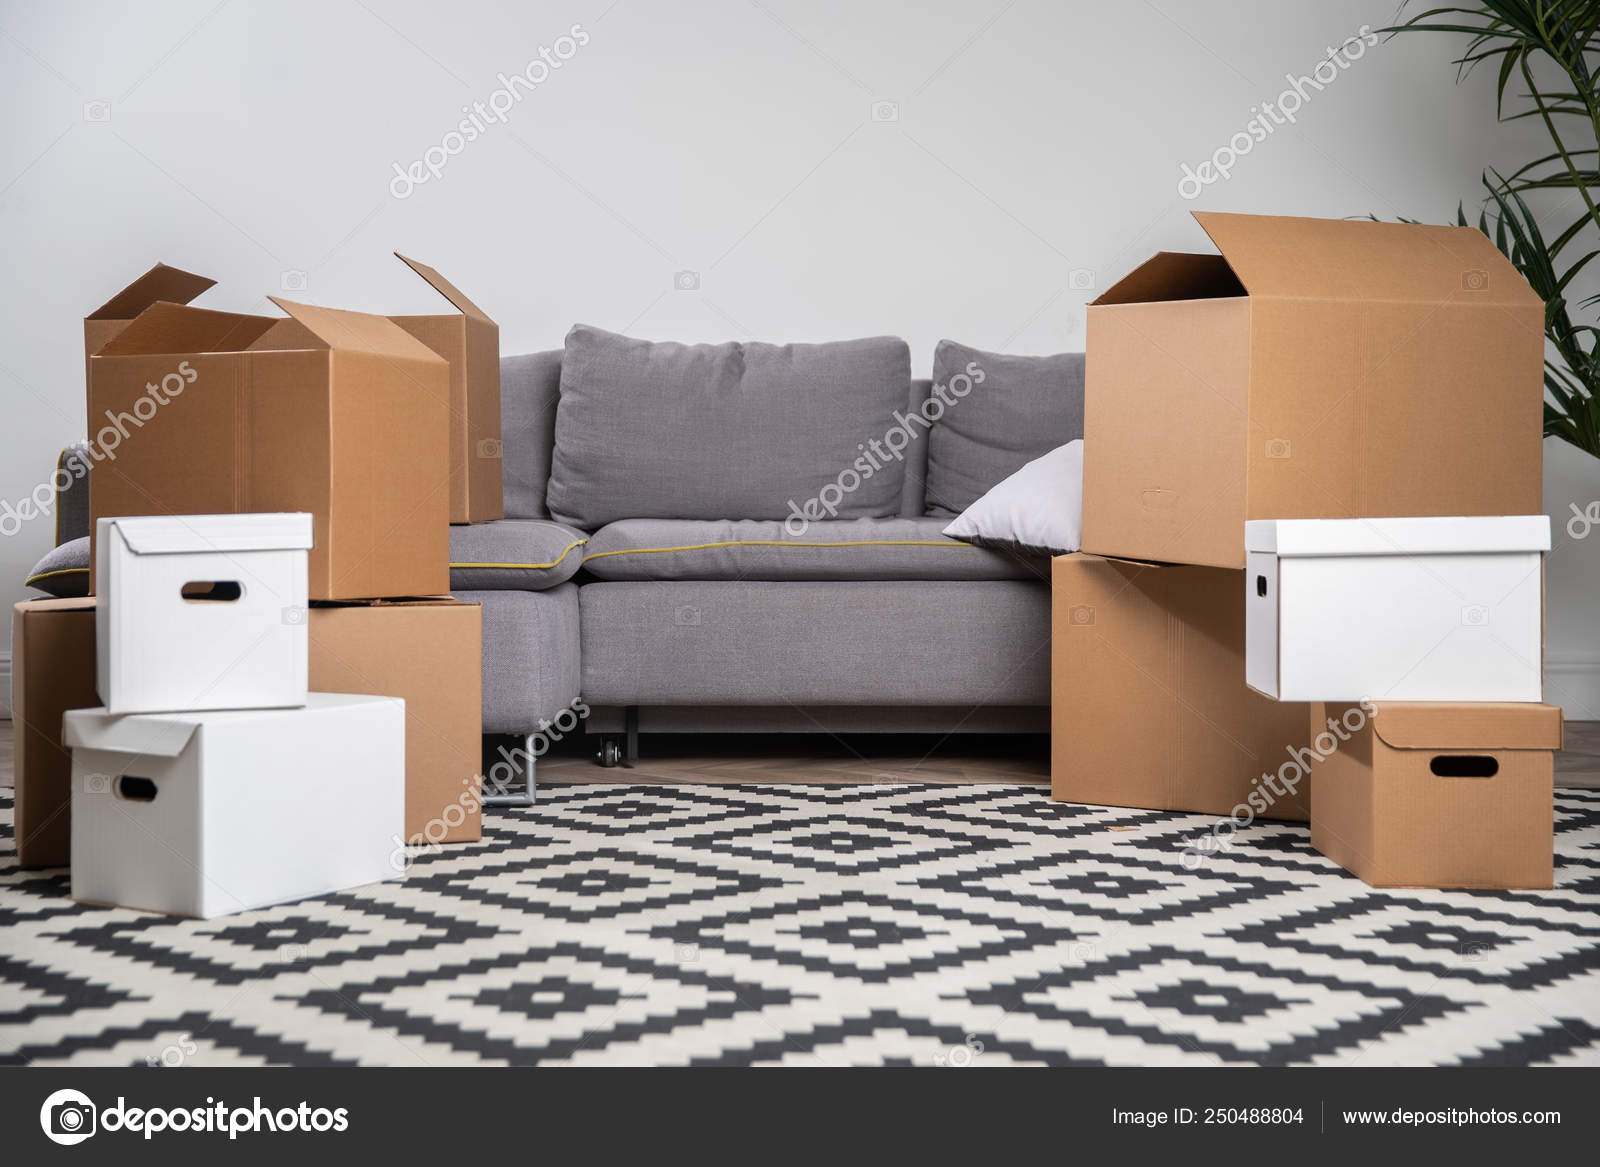 Kartons, graues Sofa, Teppich im Zimmer. - Stockfotografie: lizenzfreie  Fotos © 2s 250488804 | Depositphotos